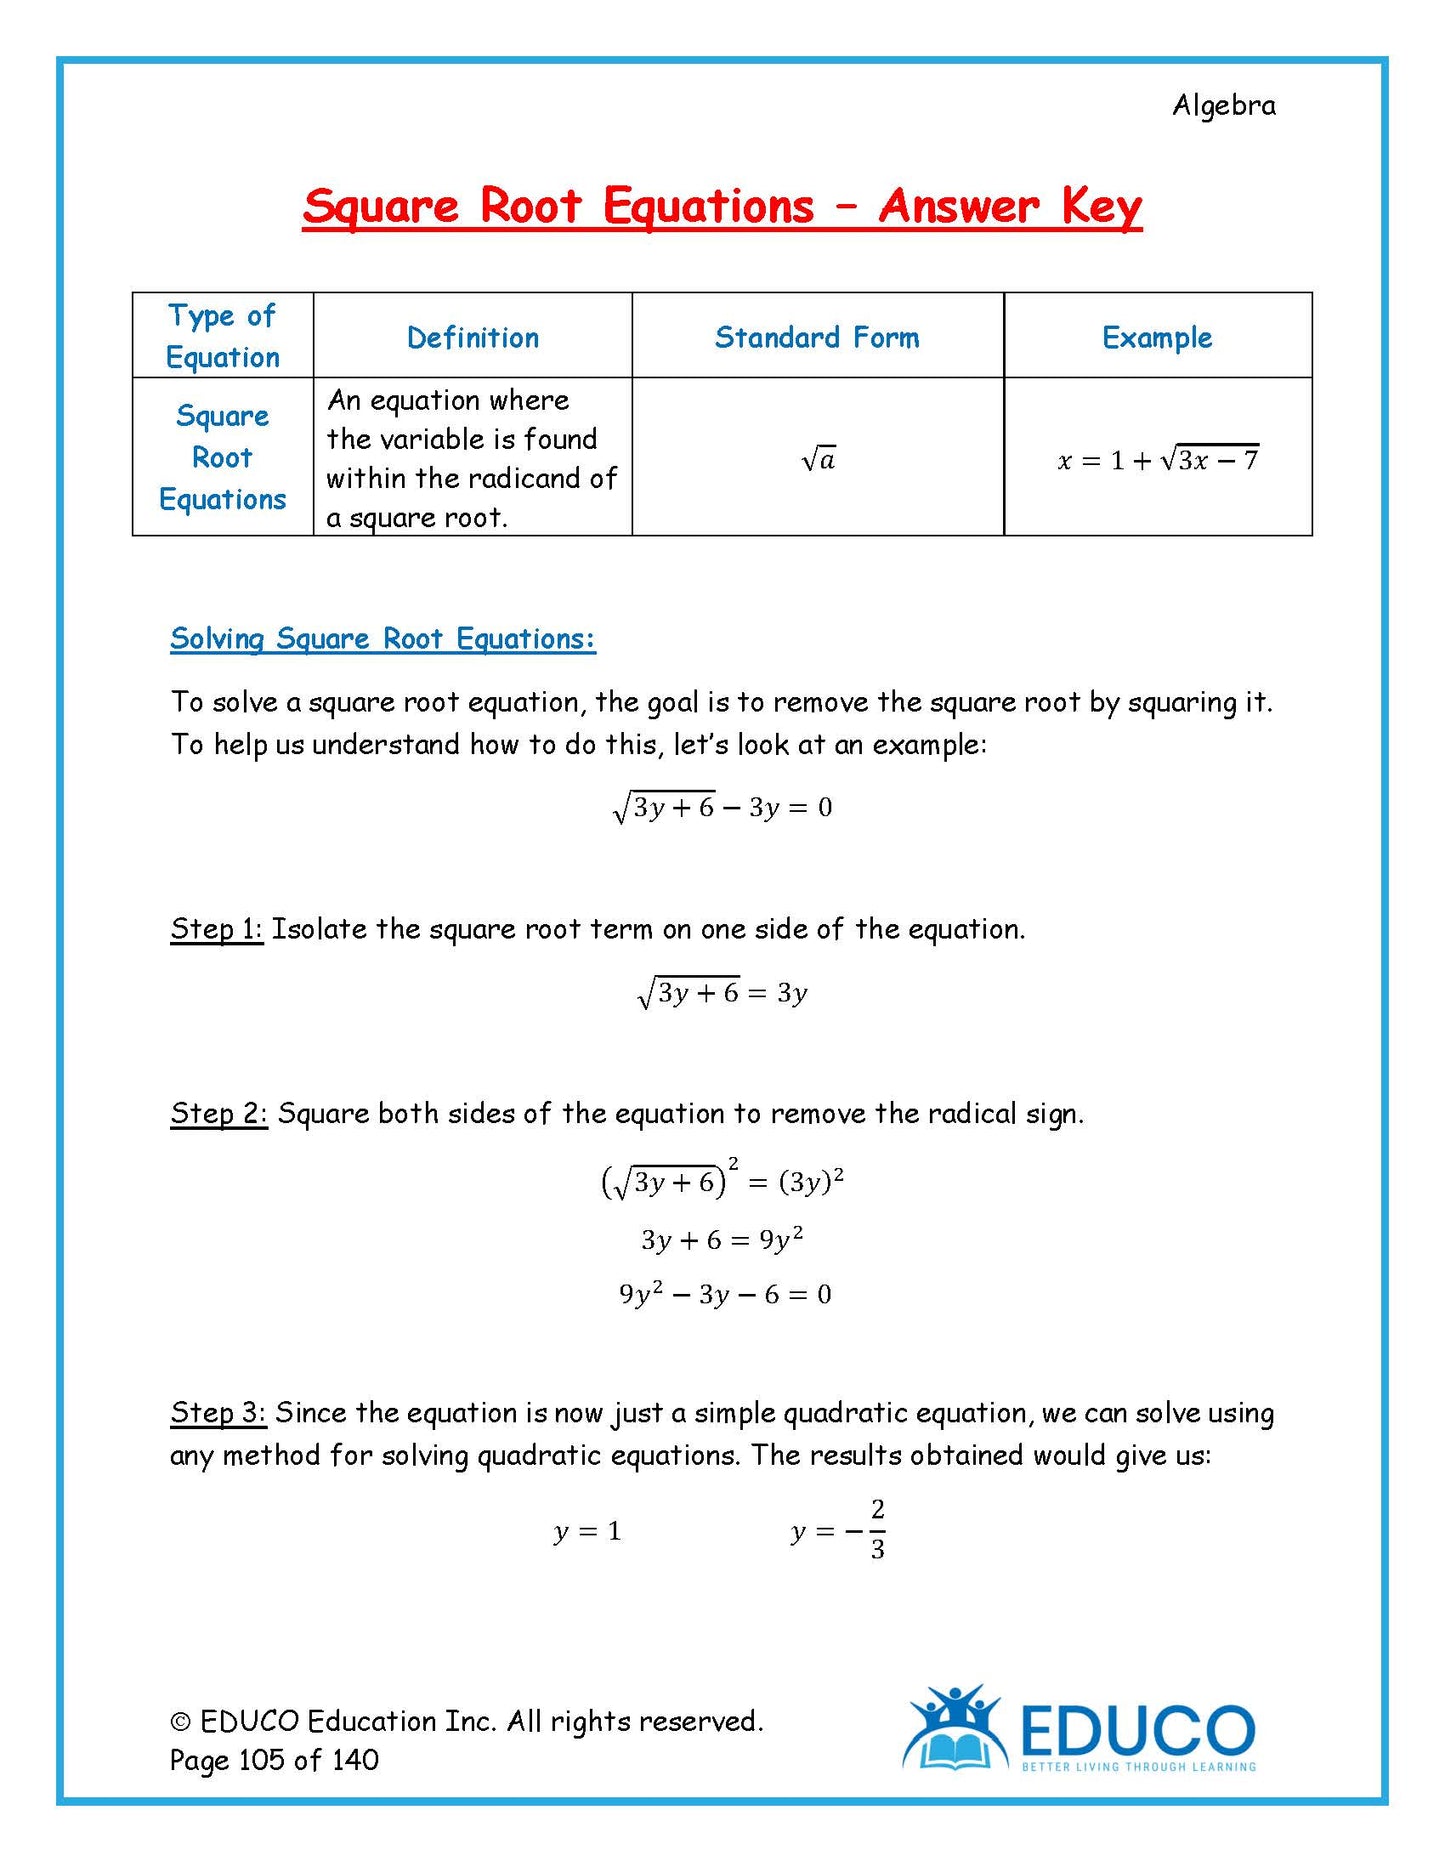 Algebra Workbook and Answer Key - (Physical Workbook + Physical Answer Key)